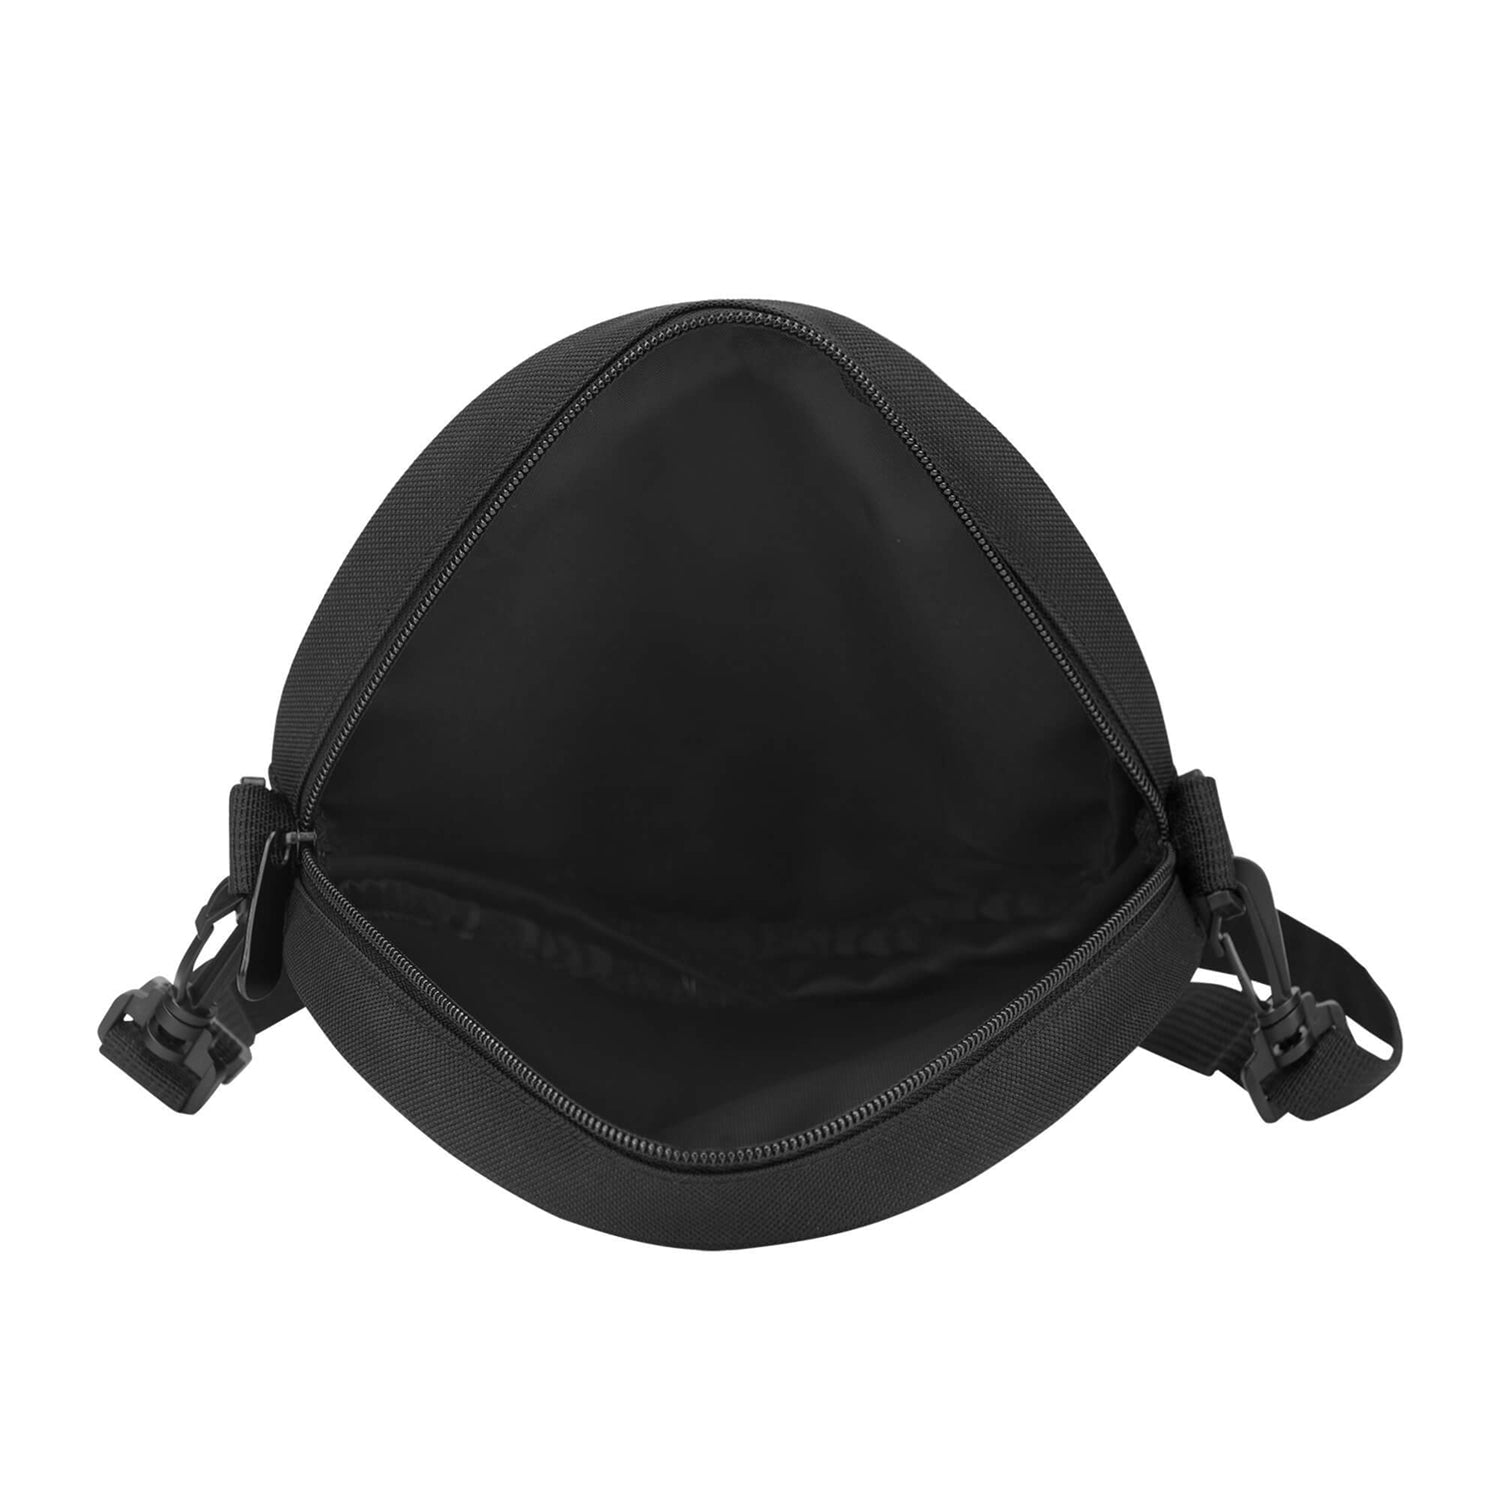 kyle-tartan-round-satchel-bags